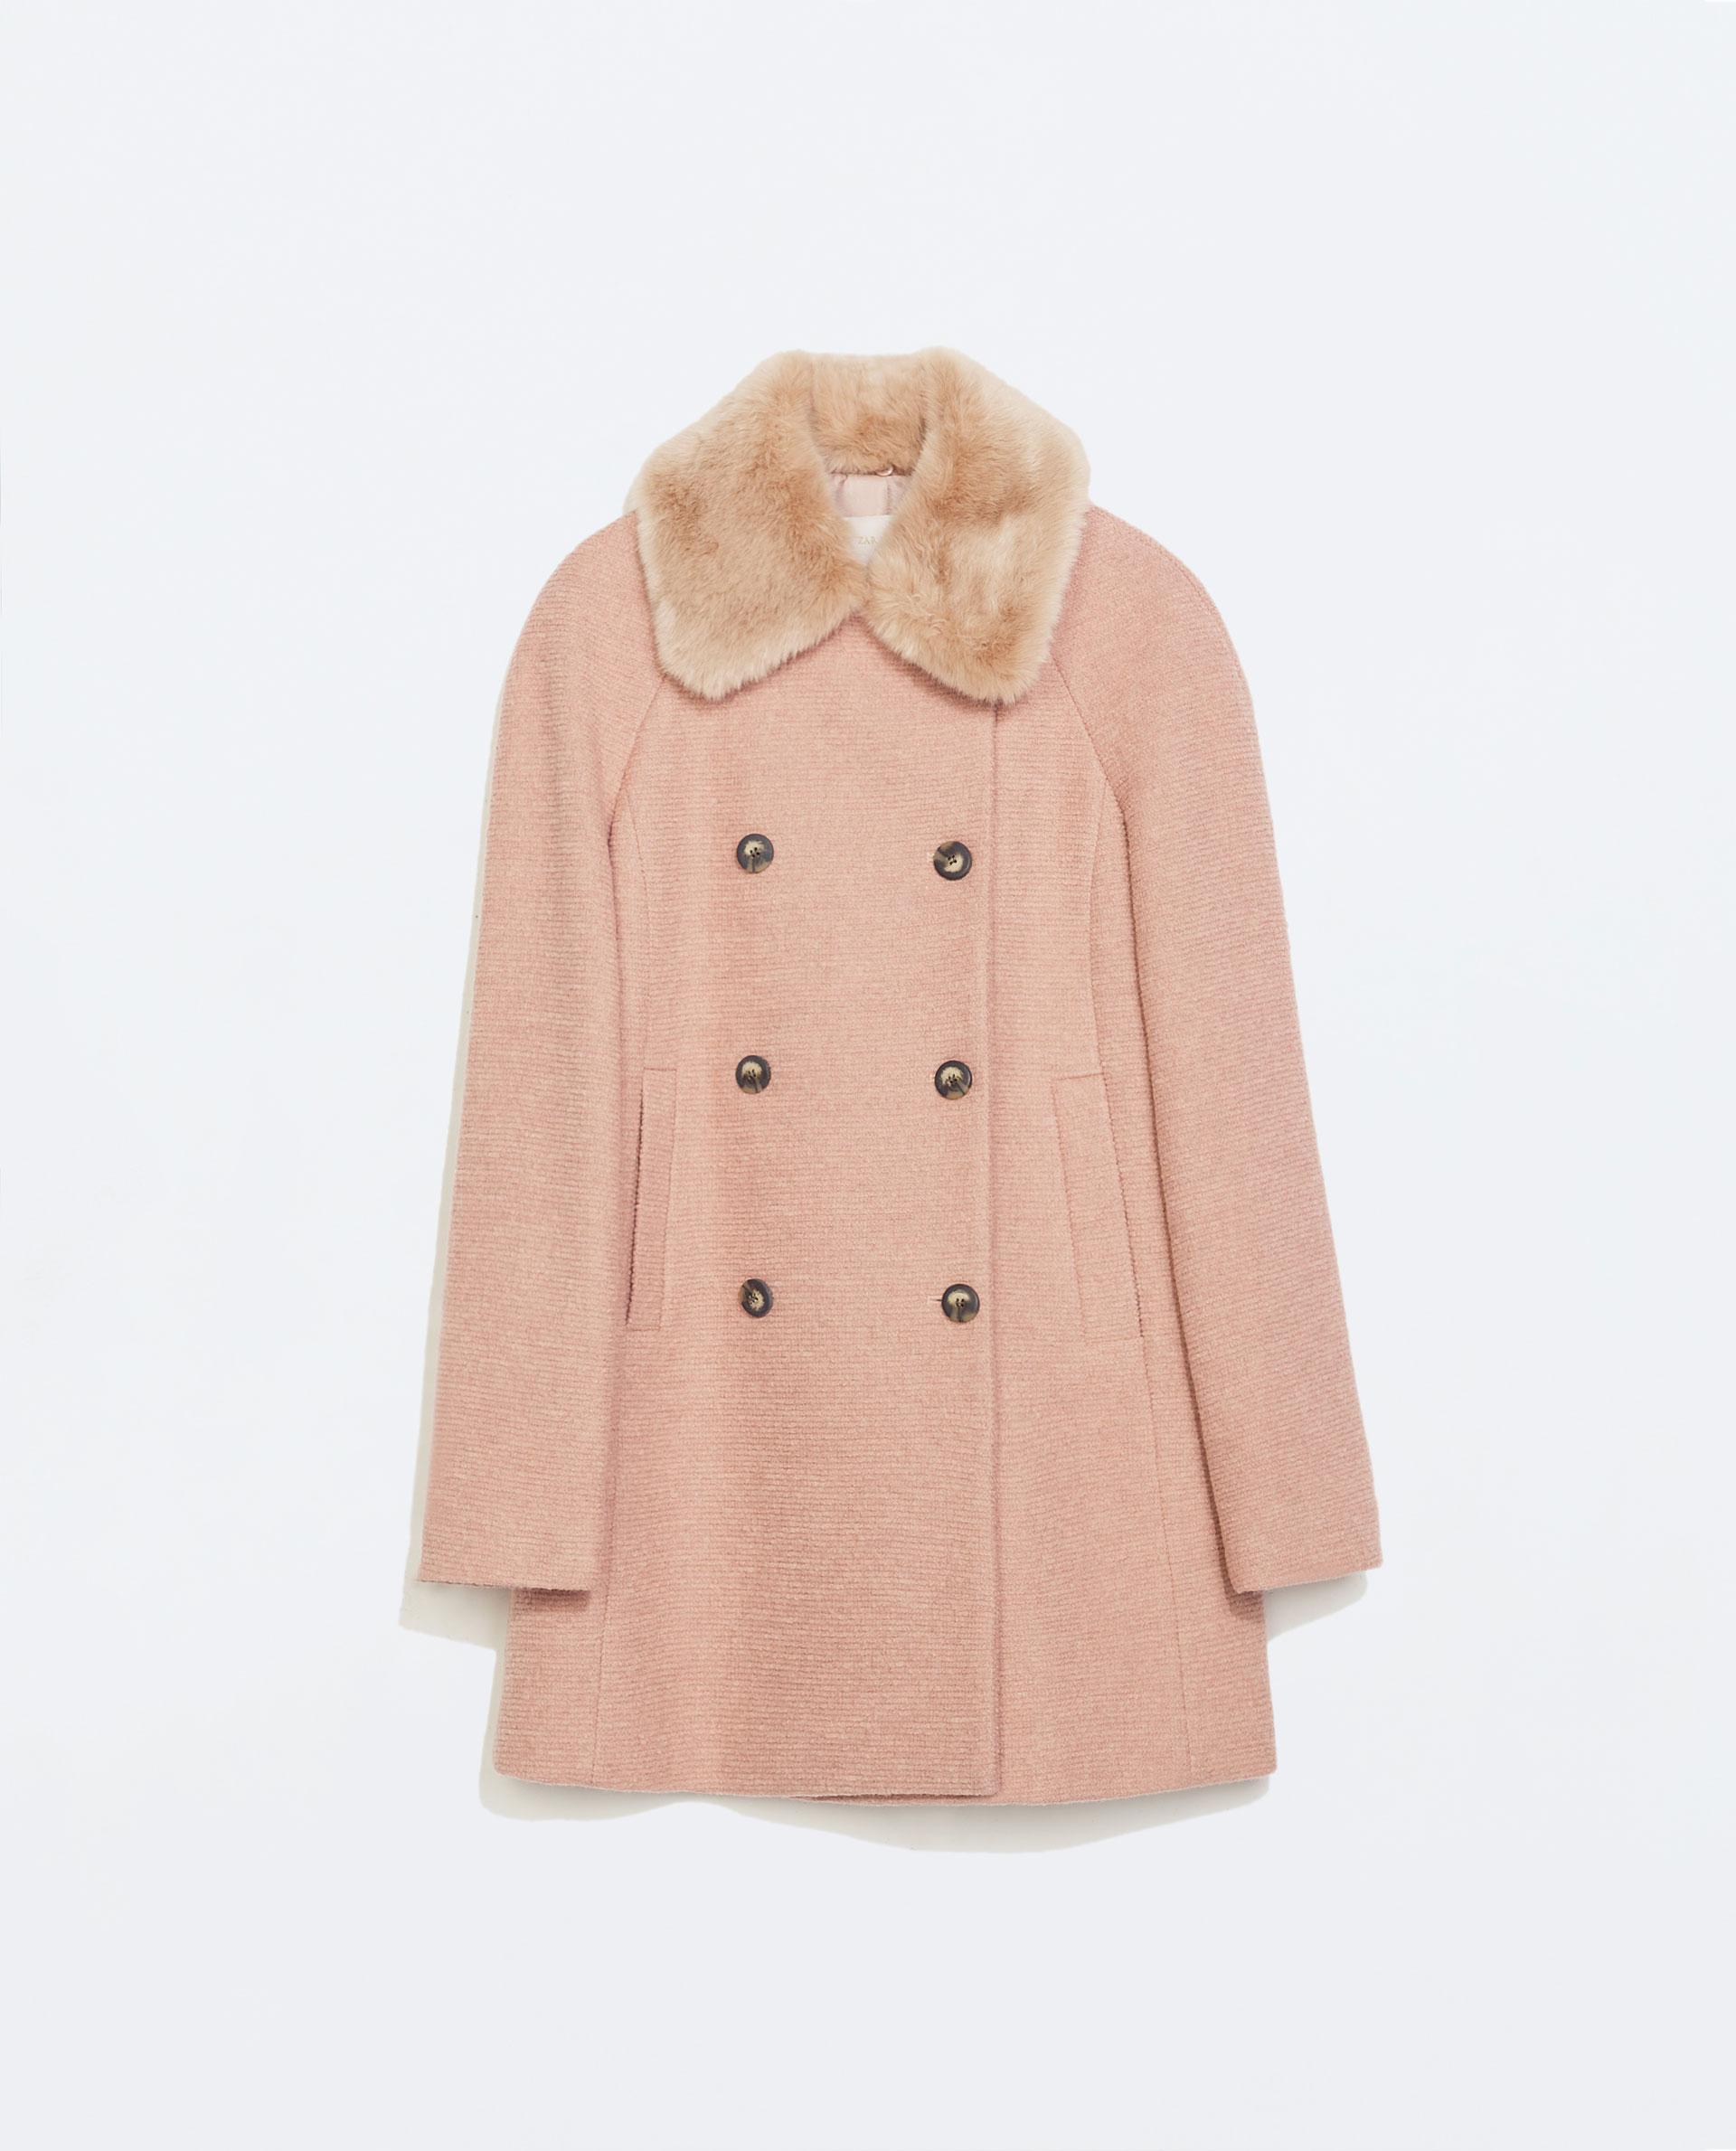 Manteau rose - Zara - 79,95 €